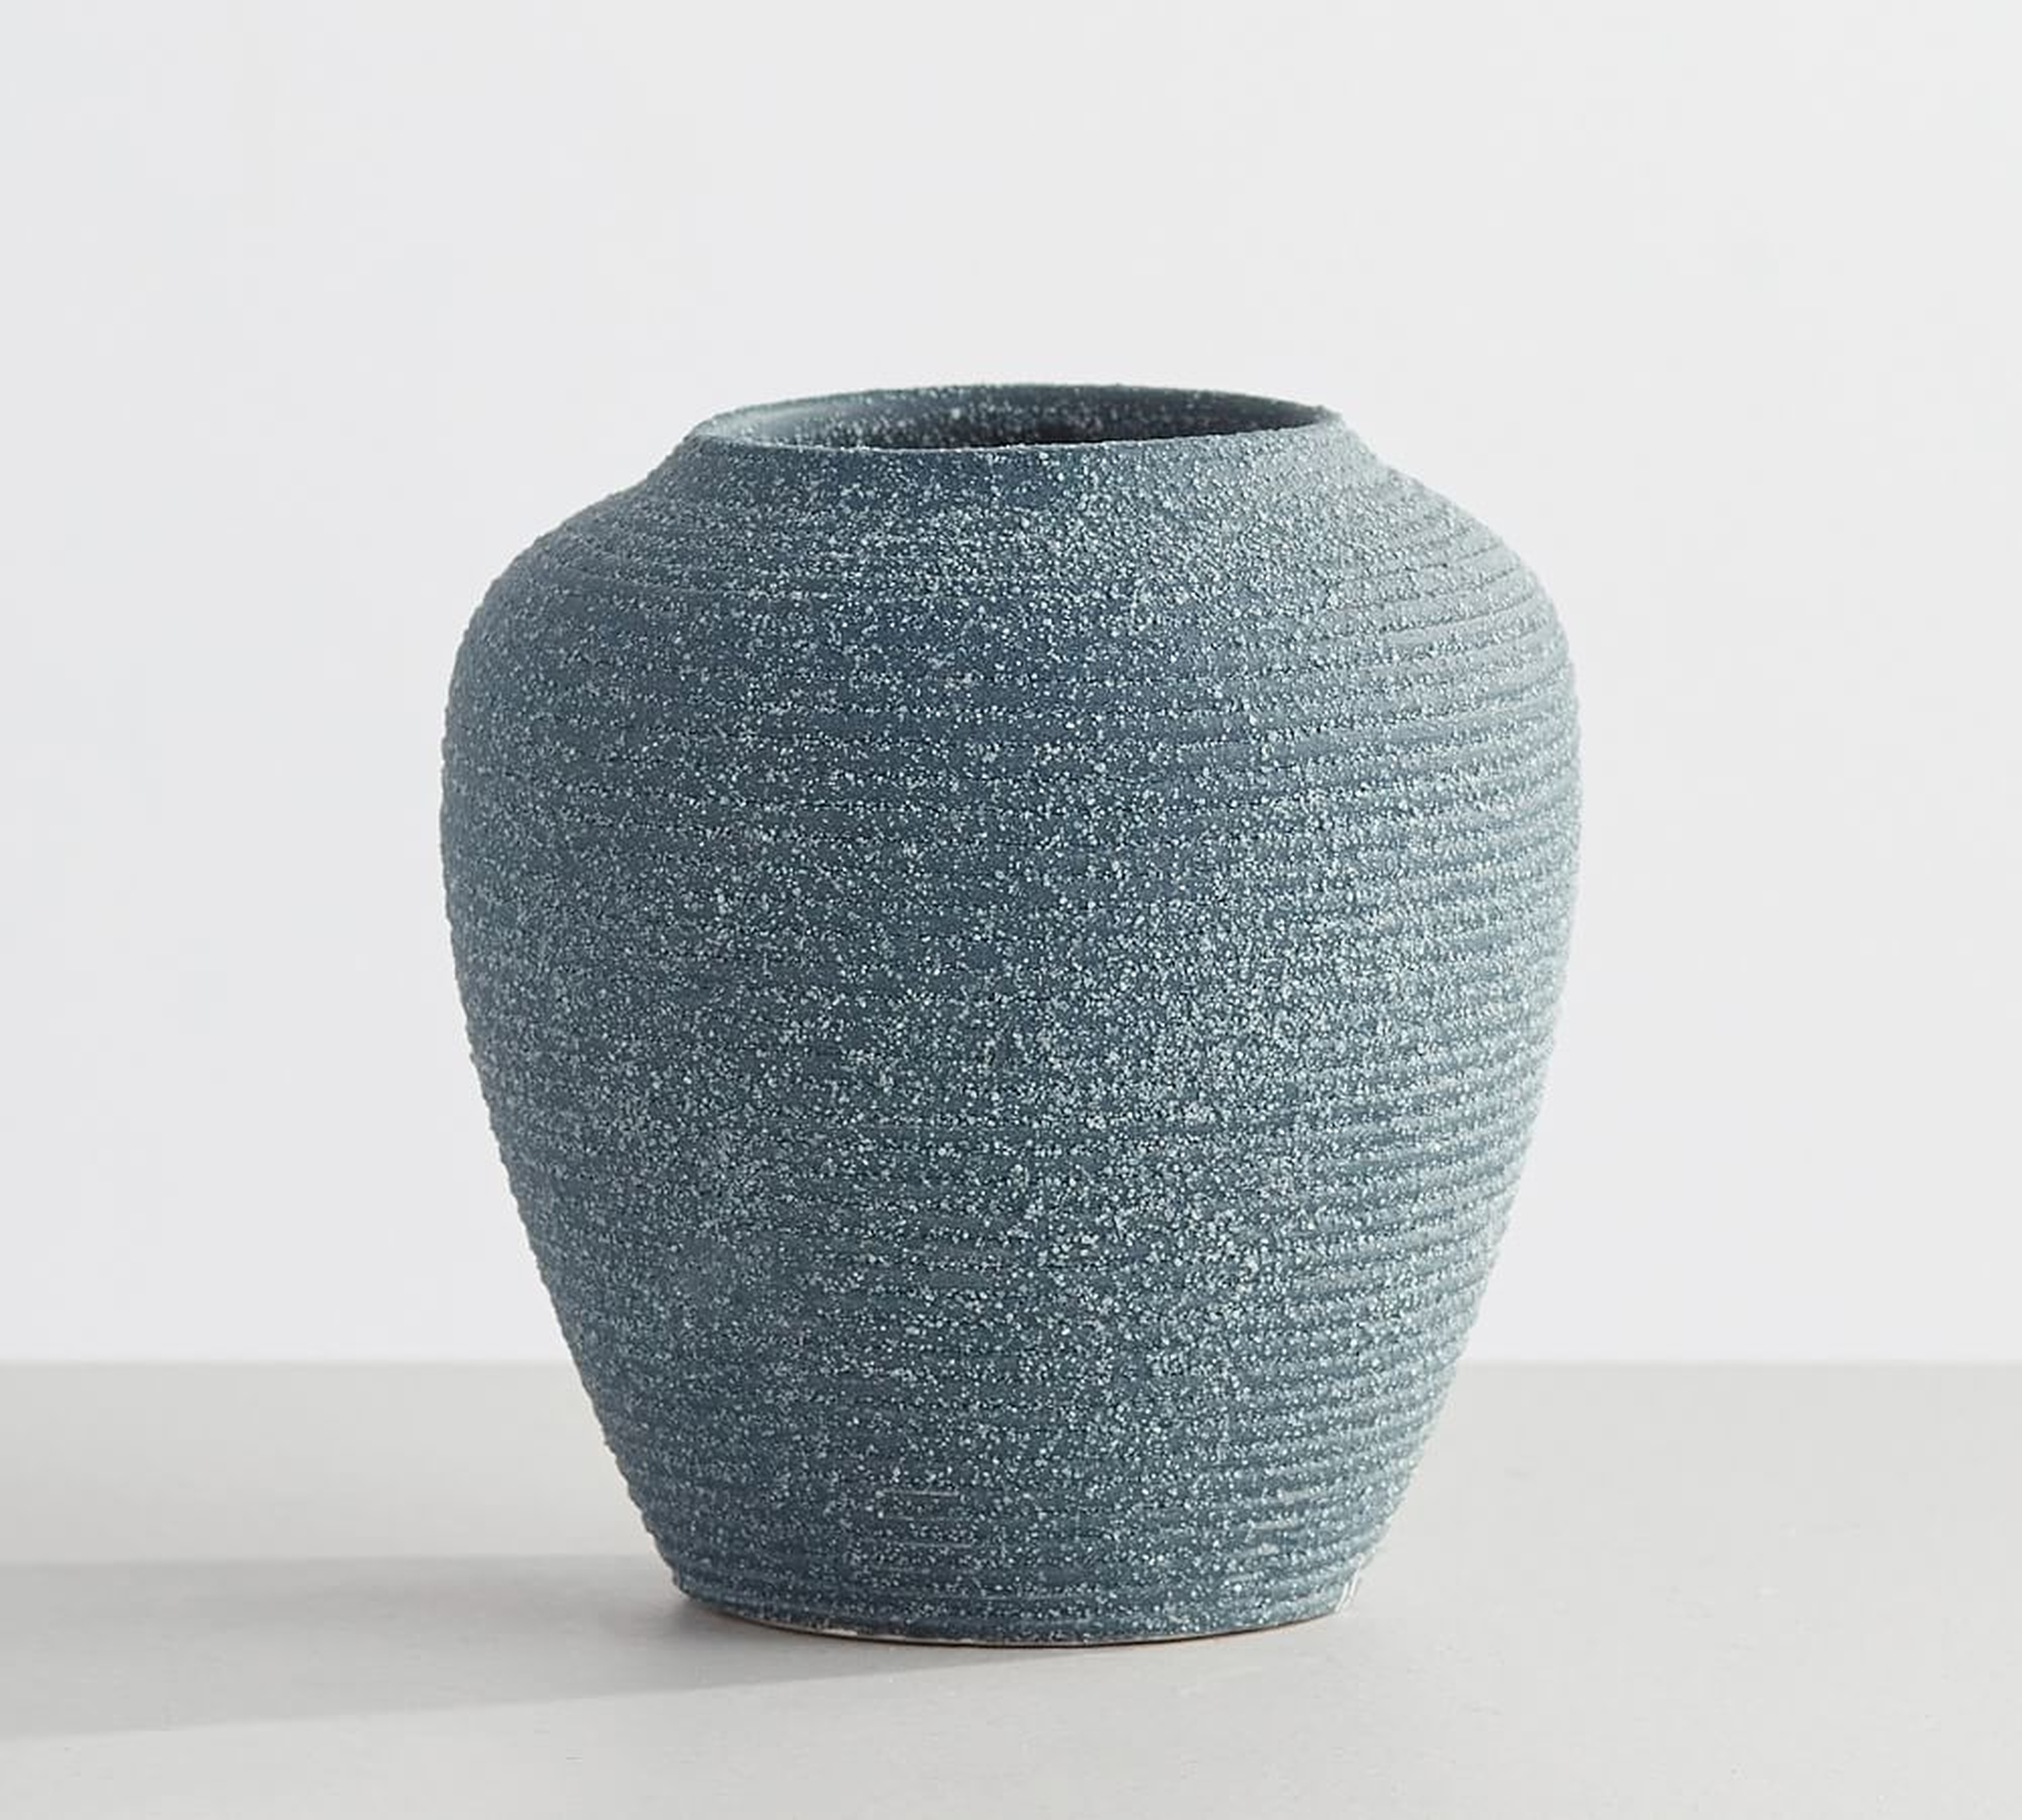 Bondi Terra Cotta Bud Vase, Blue, Medium, 4.25"H - Pottery Barn